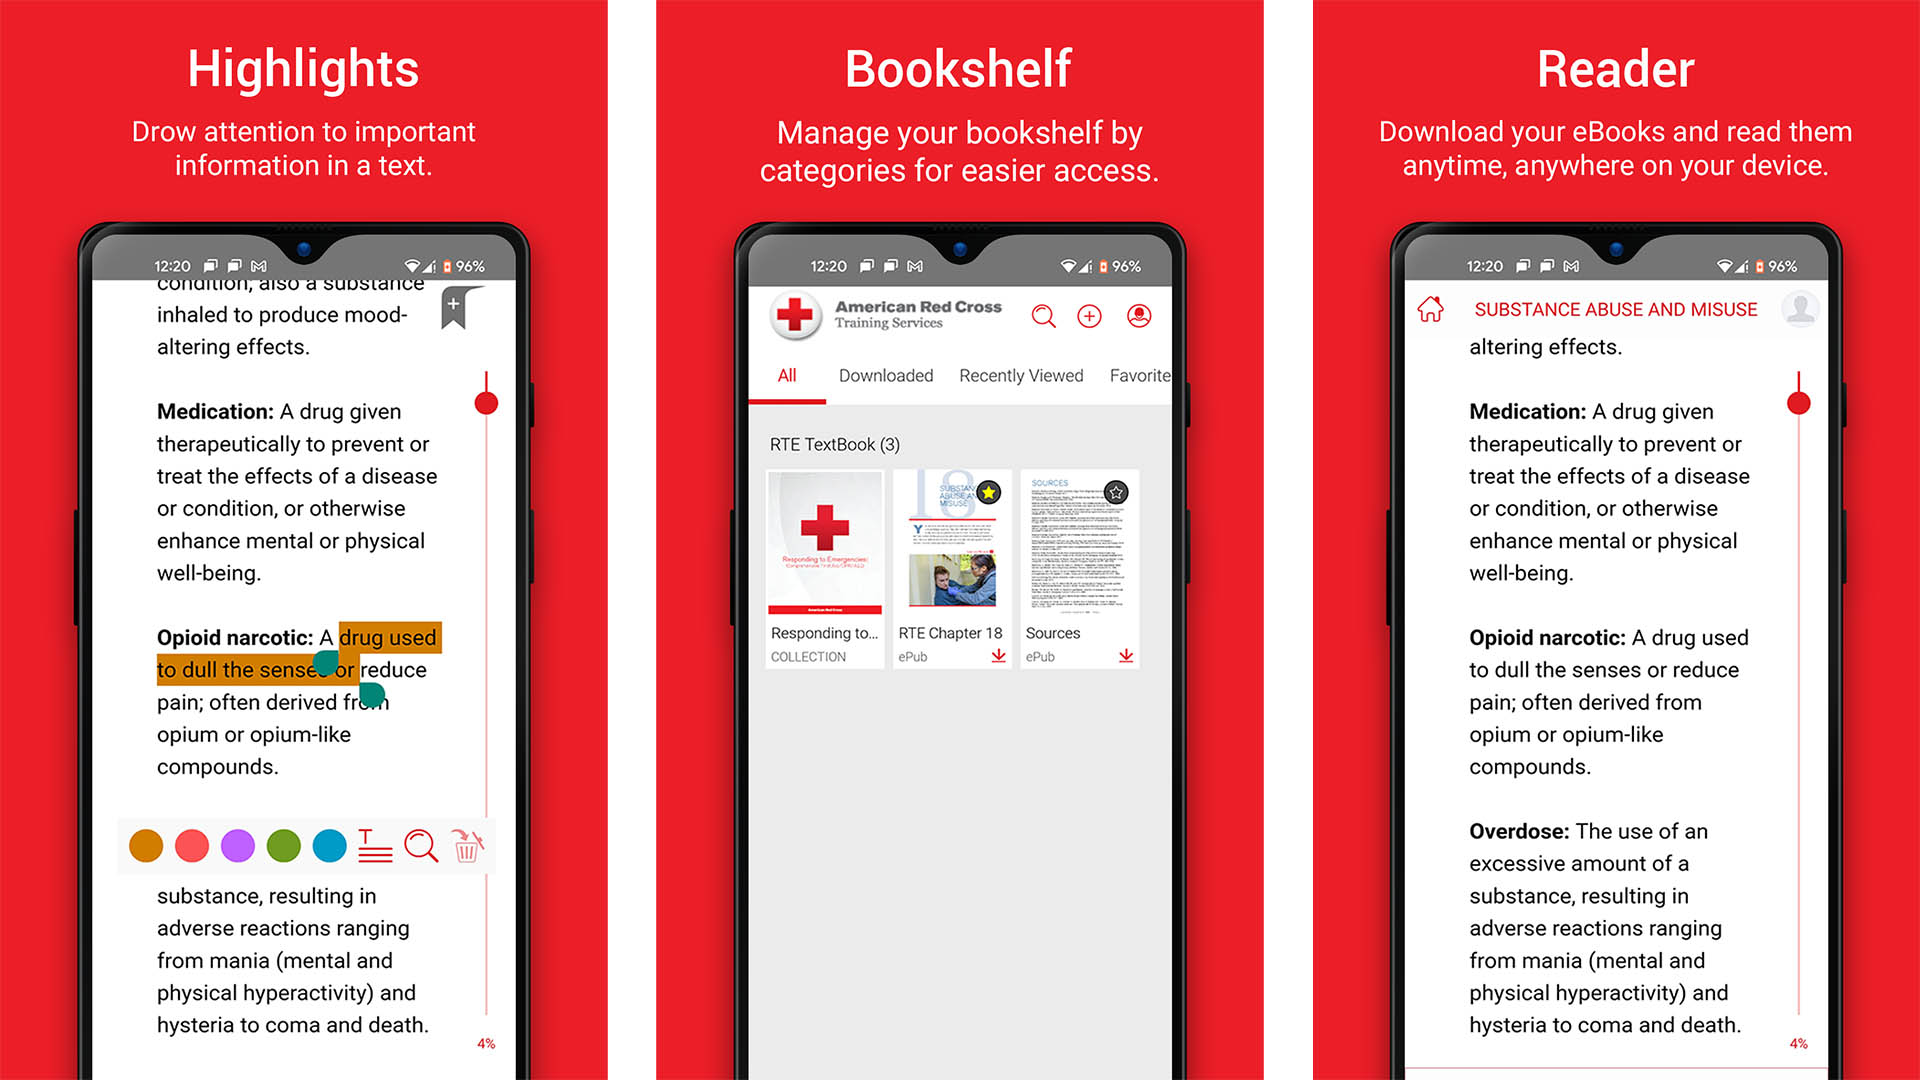 eBooks American Red Cross screenshot 2021